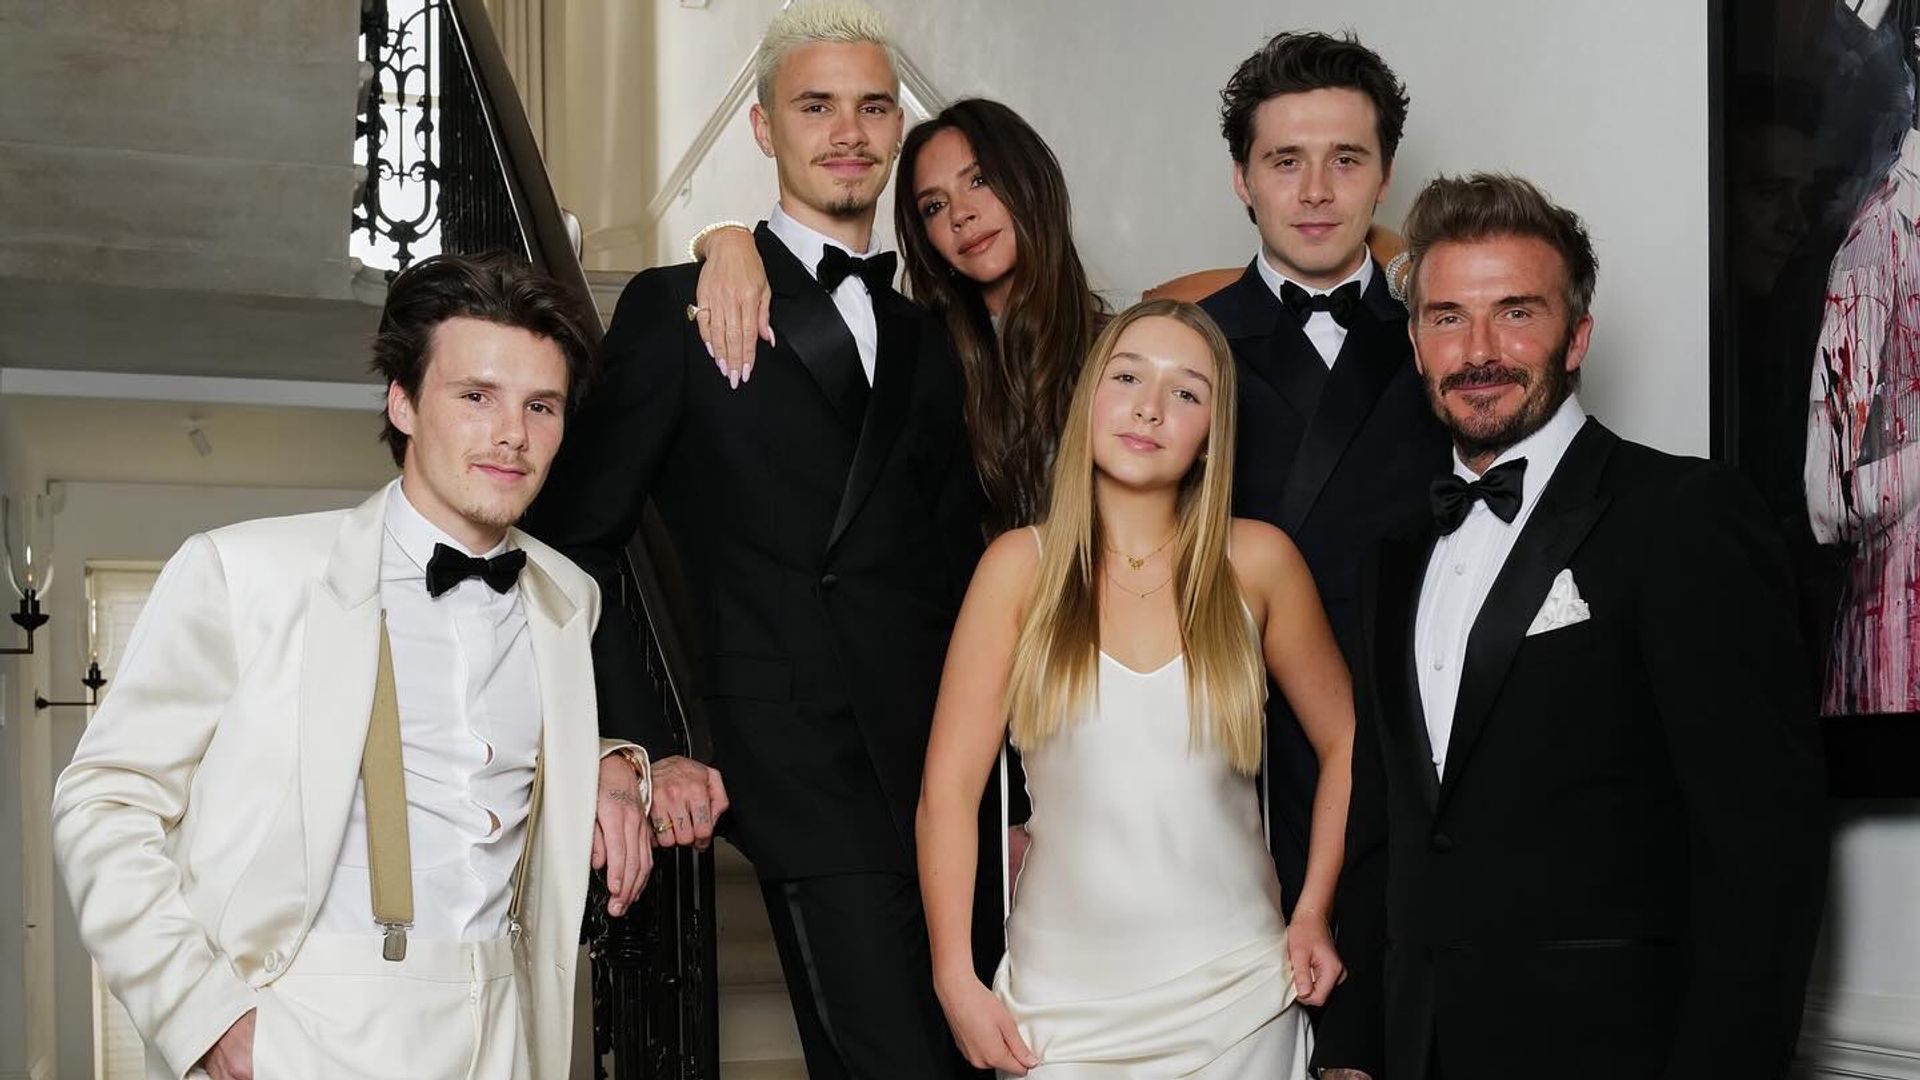 Harper Beckham wearing a white dress with the Beckham family